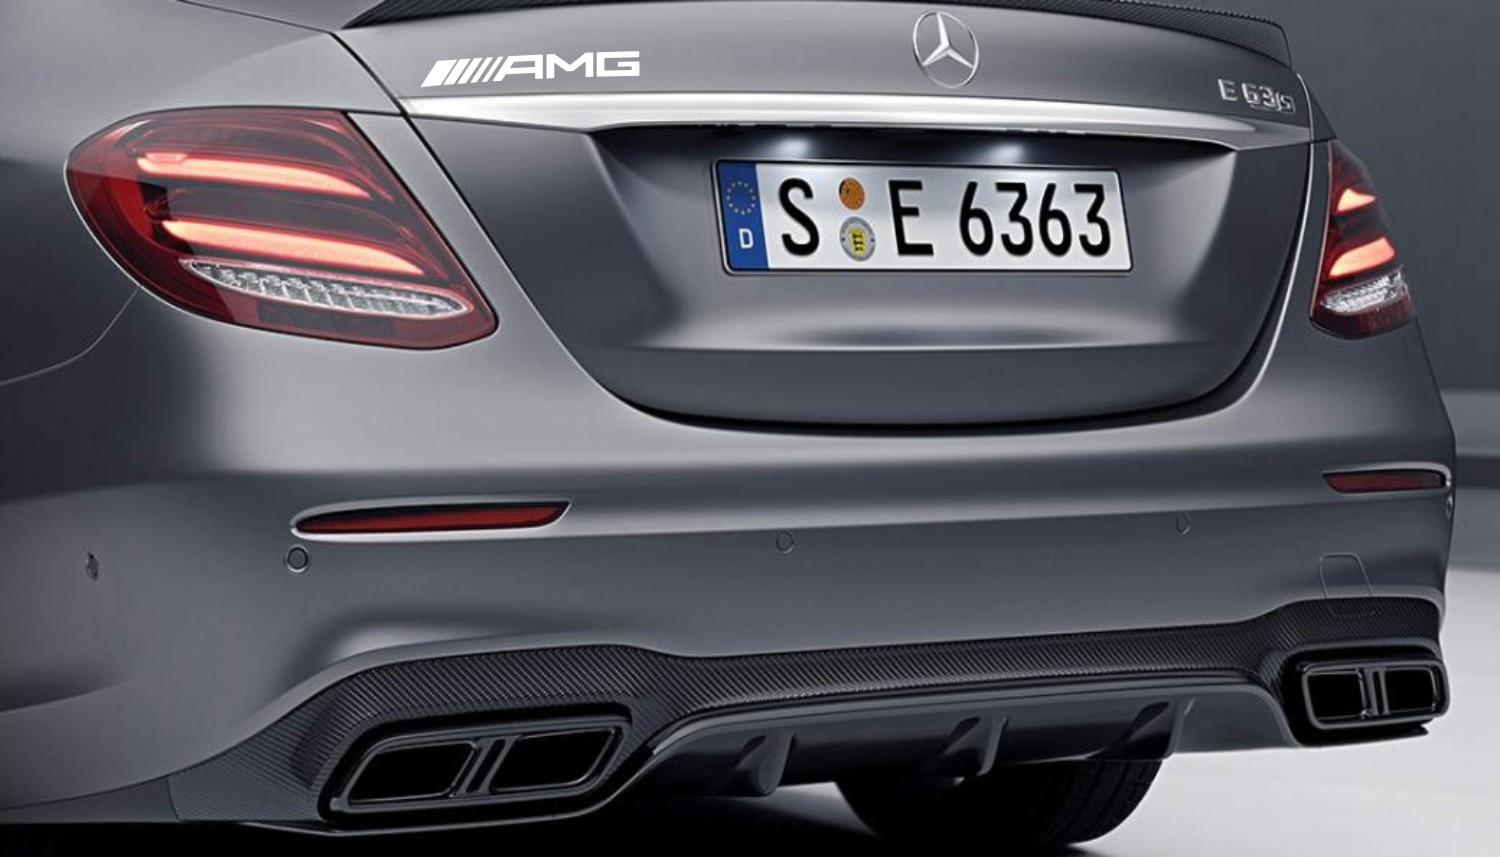 Adesivos AMG Mercedes - 2 Unid de 20cm. Alta qualidade